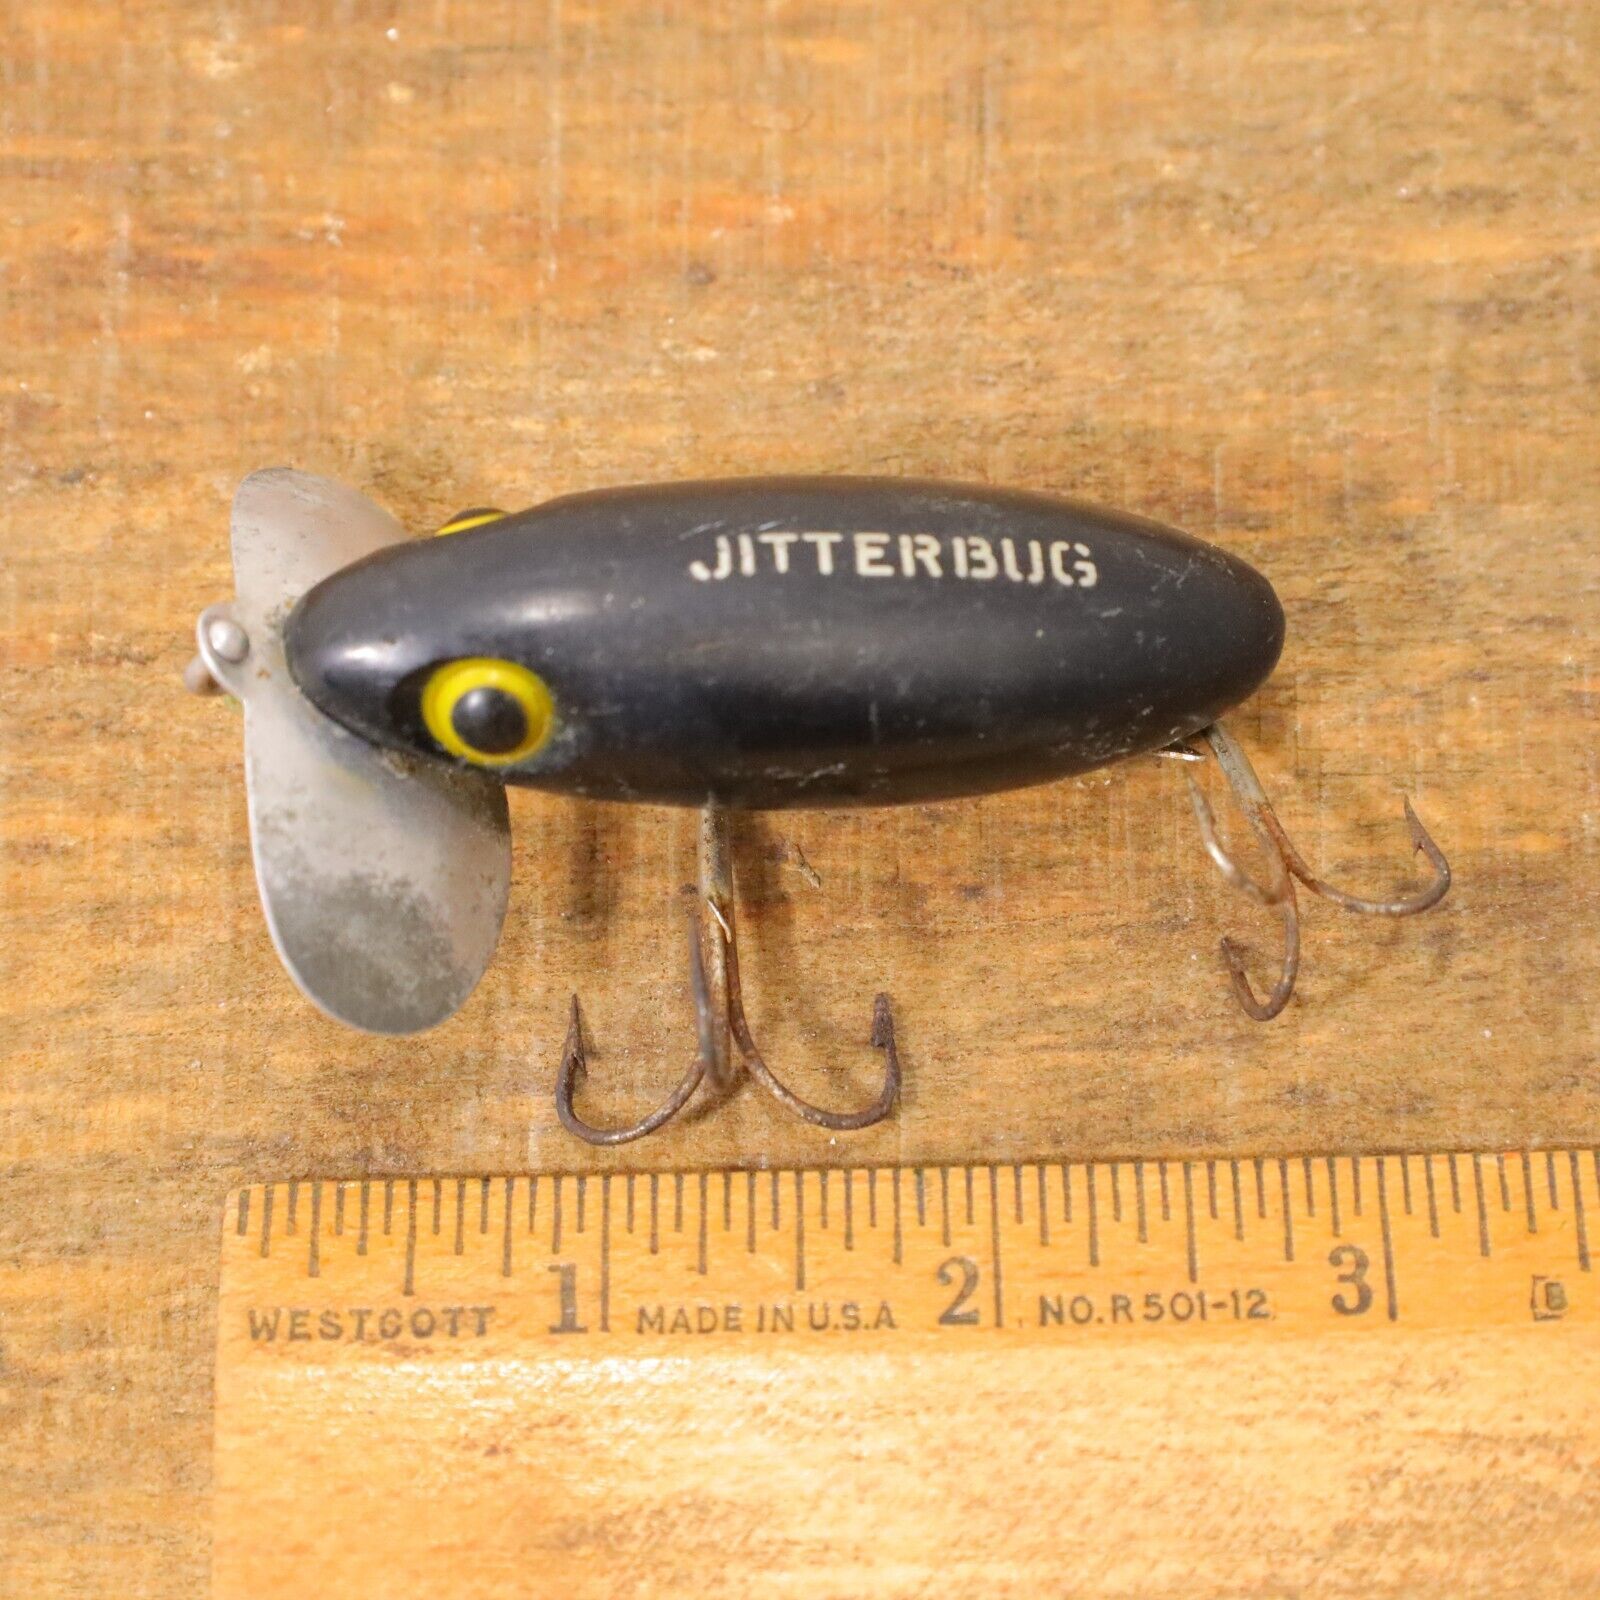 Vintage Fred Arbogast Jitterbug Fishing Lure and 42 similar items